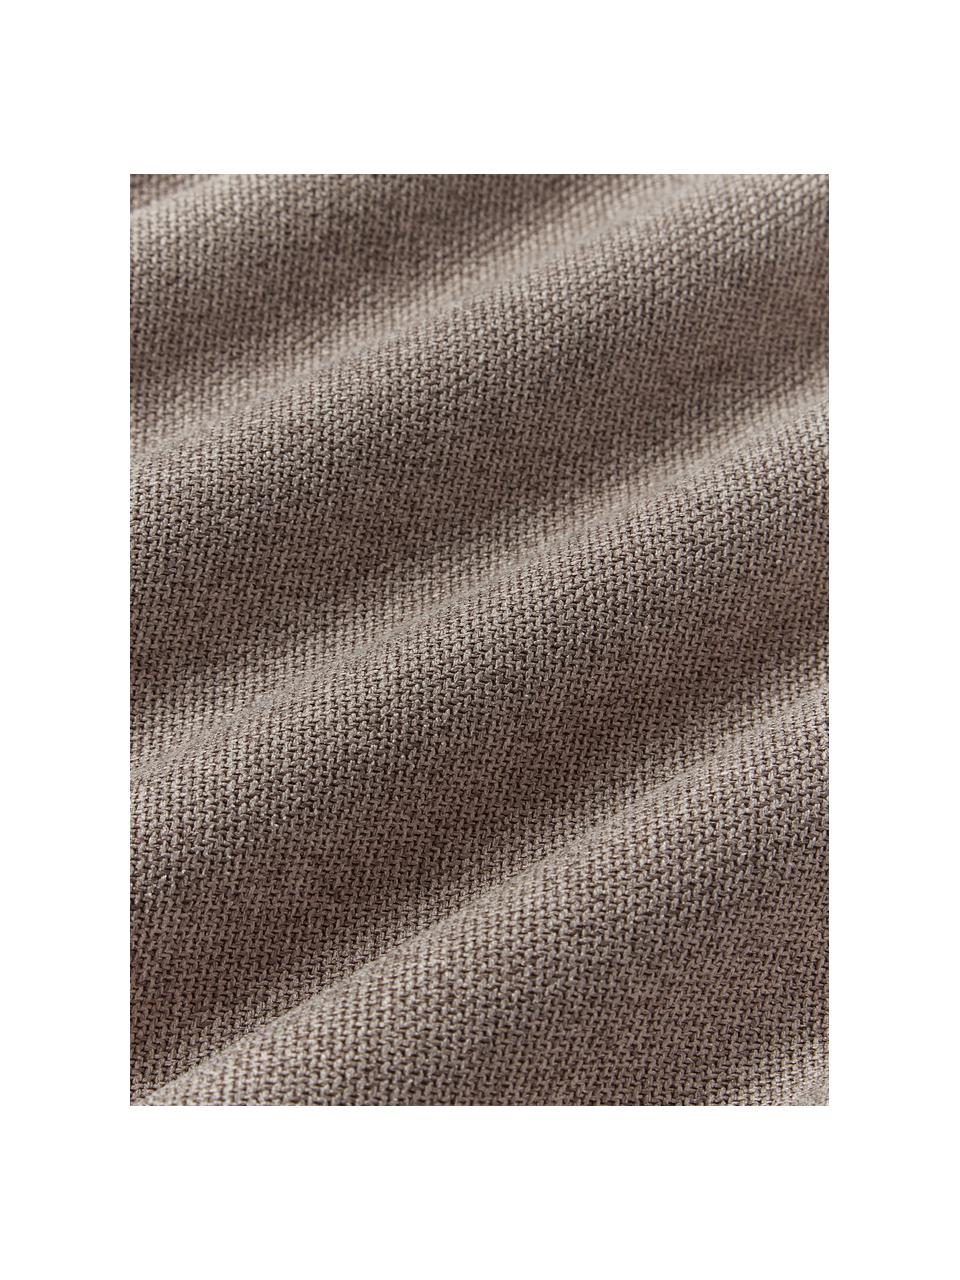 Poduszka Lennon, Taupe tkanina, S 80 x D 50 cm